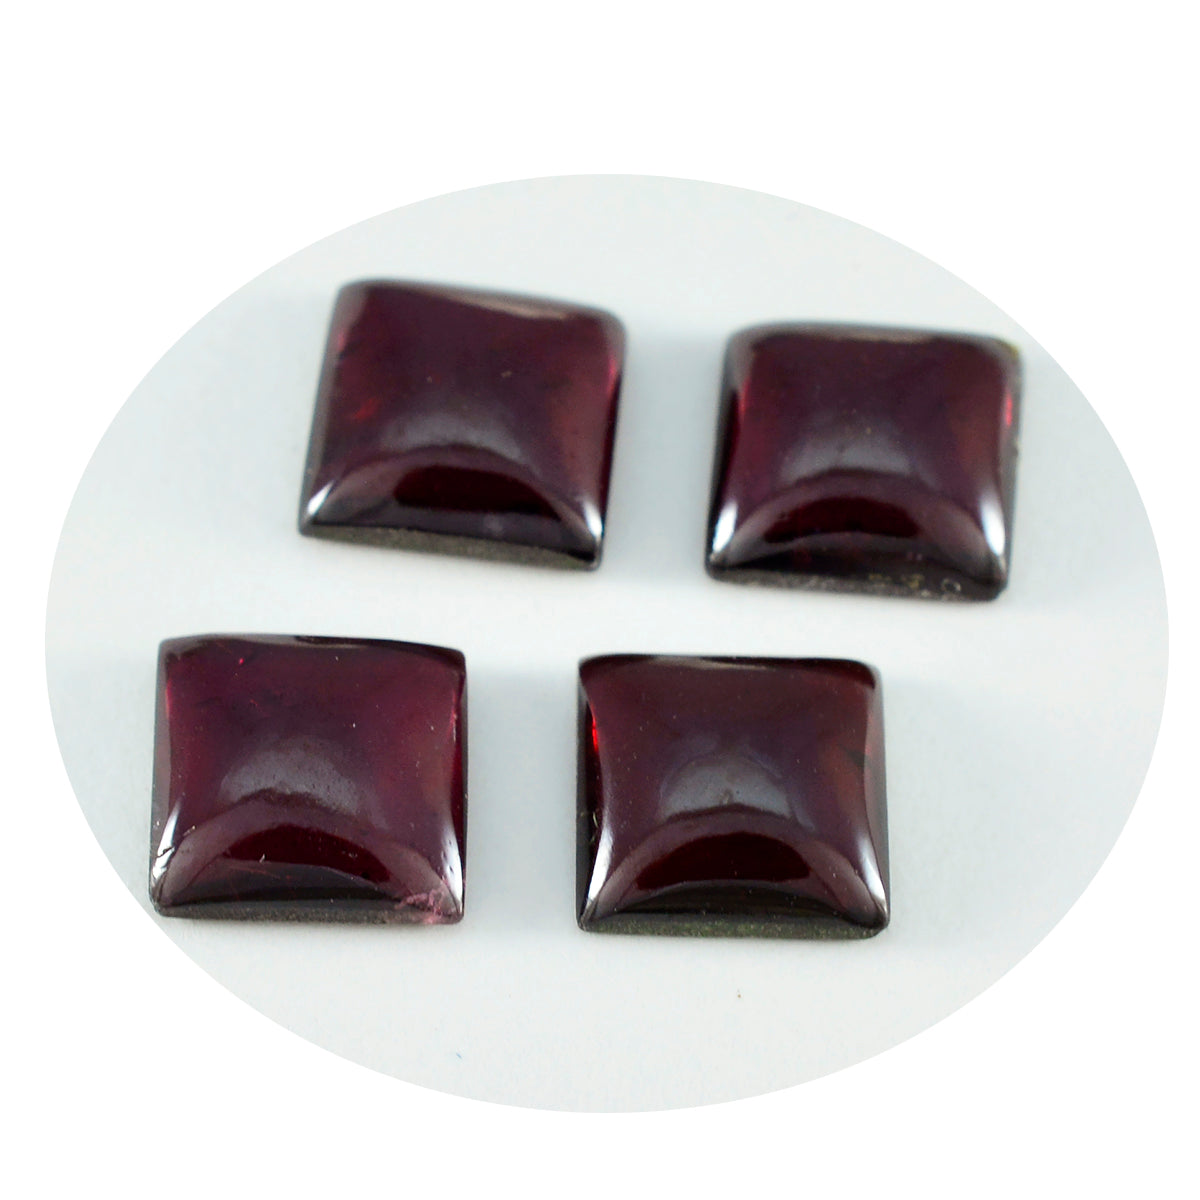 Riyogems 1PC Red Garnet Cabochon 12x12 mm Square Shape great Quality Gemstone